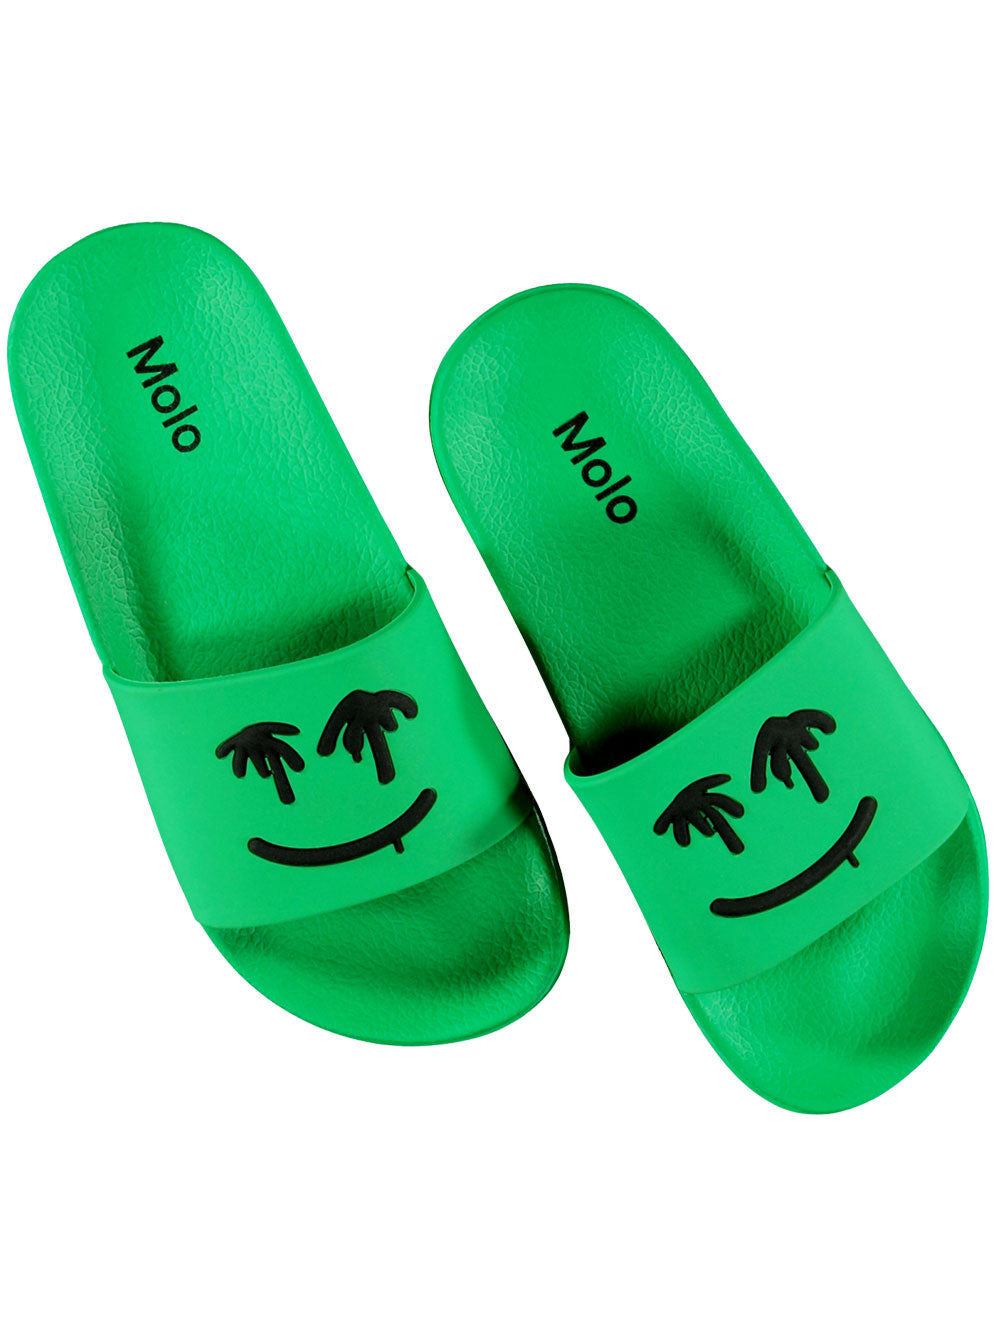 Zhappy Bright Green Flip Flops